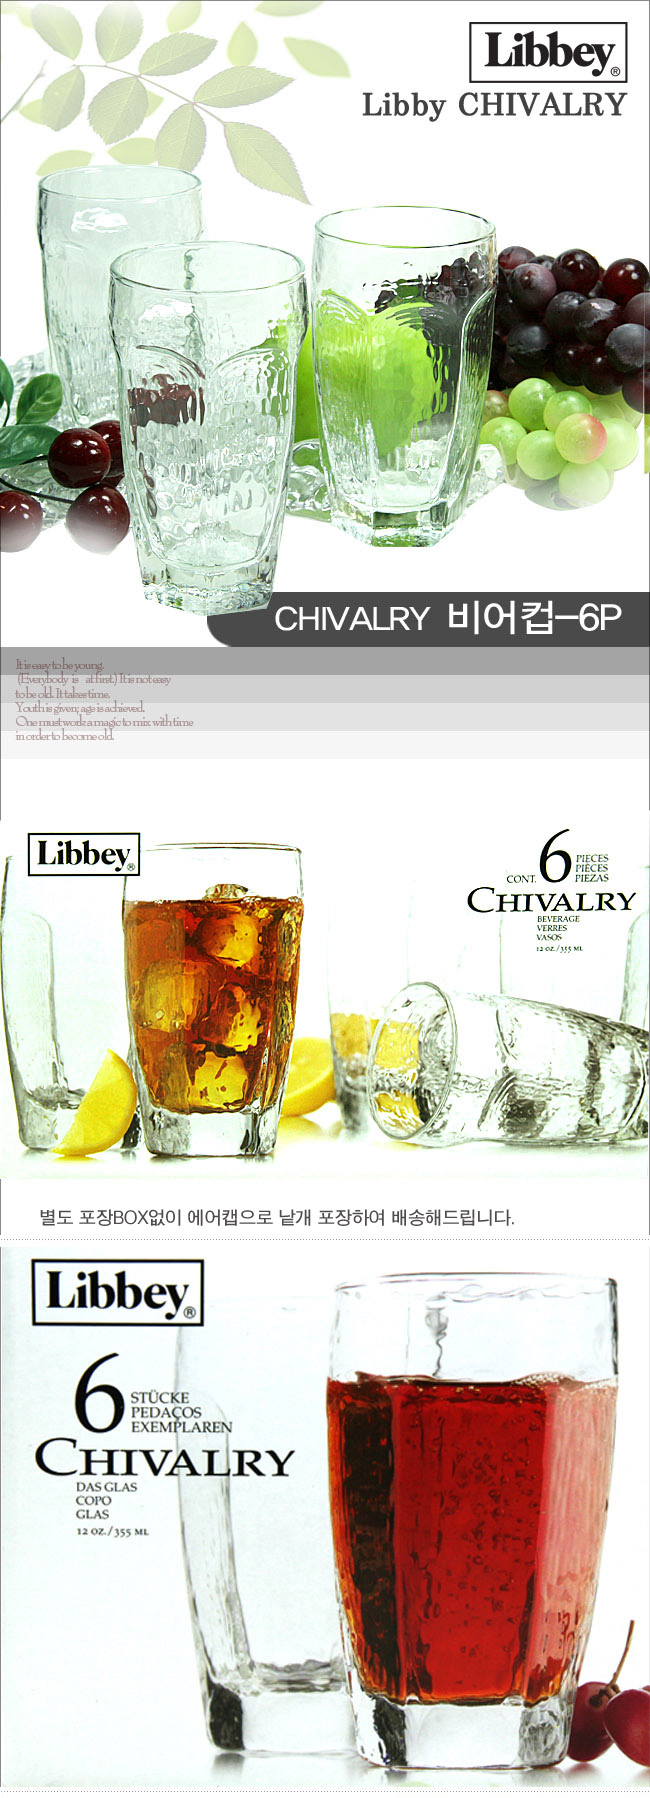 libby-chivalry1.jpg